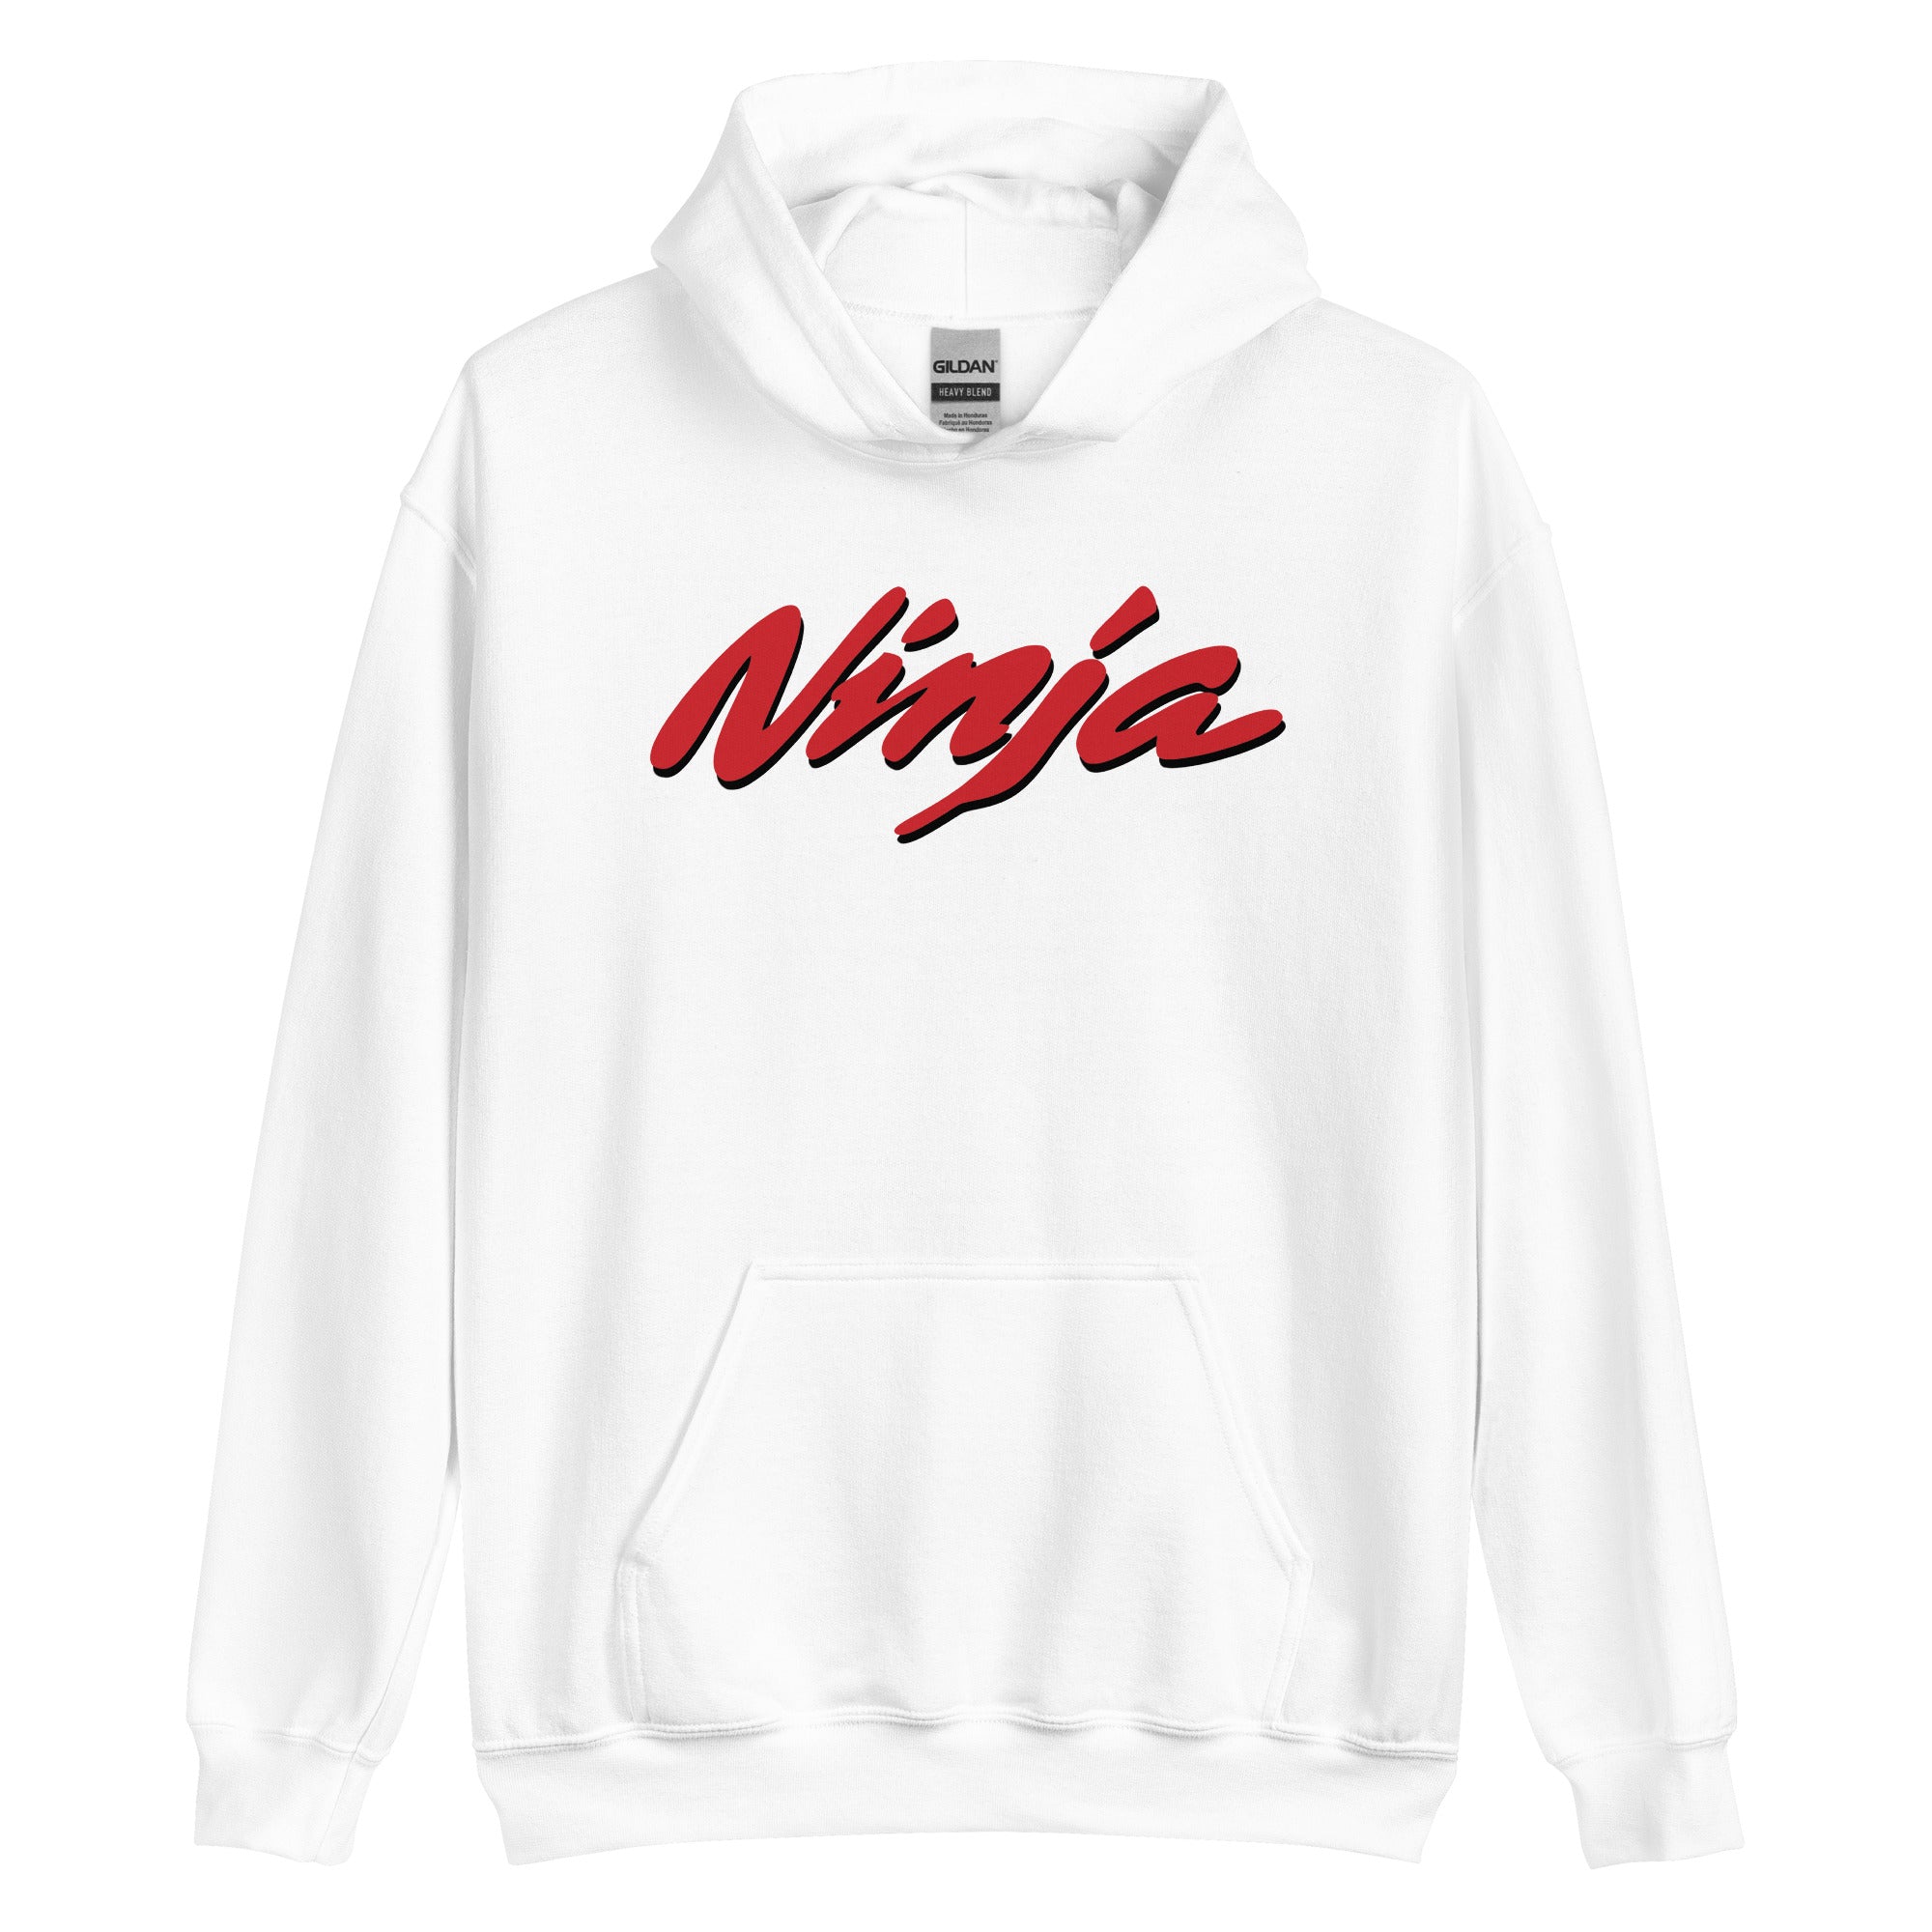 Ninja Hoodie & Hooded Sweatshirt for Women